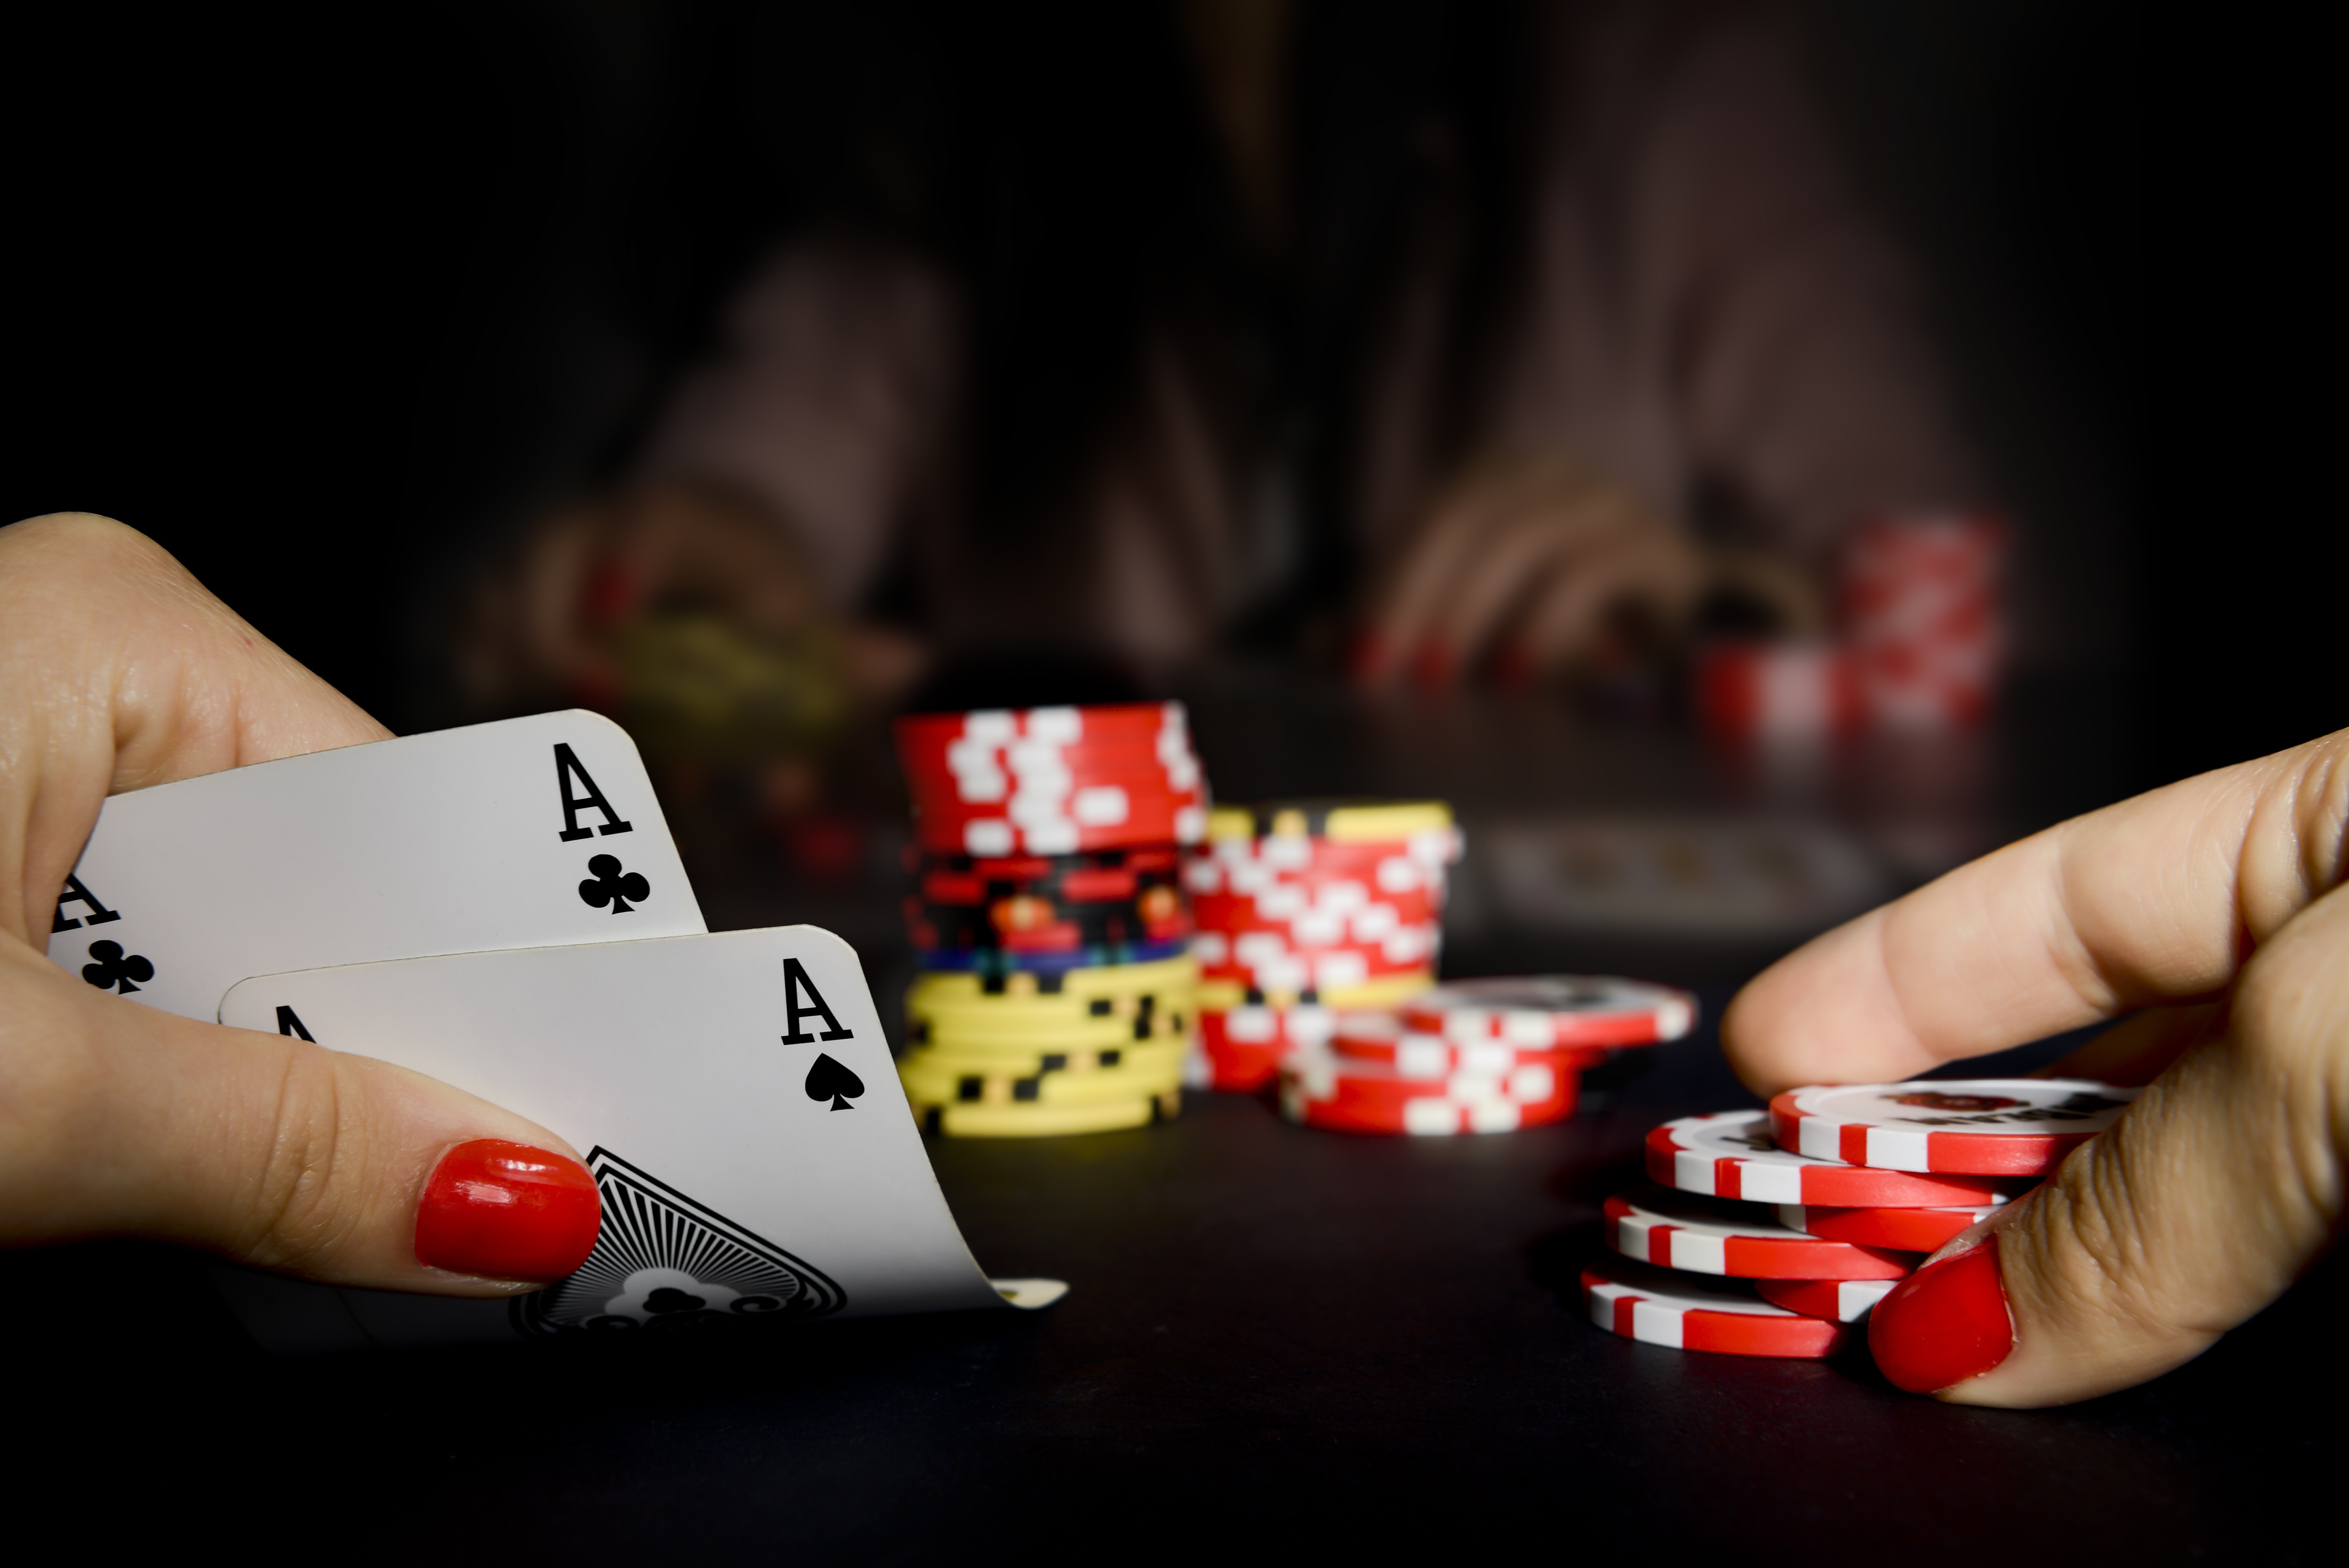 Is Online Poker Legal In Nc